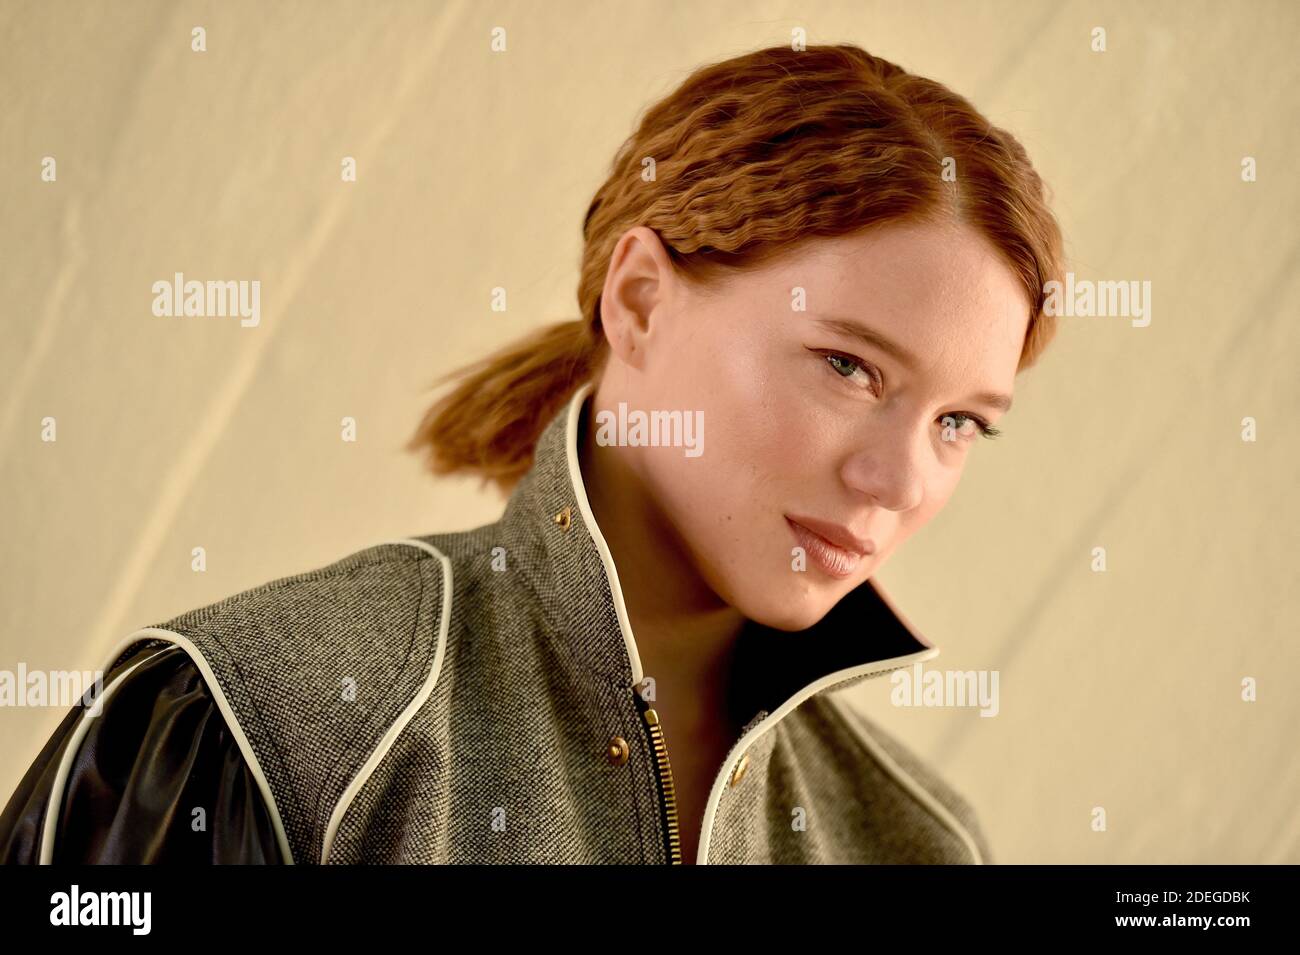 Louis Vuitton on X: Undeniably stylish. #LeaSeydoux embodies the